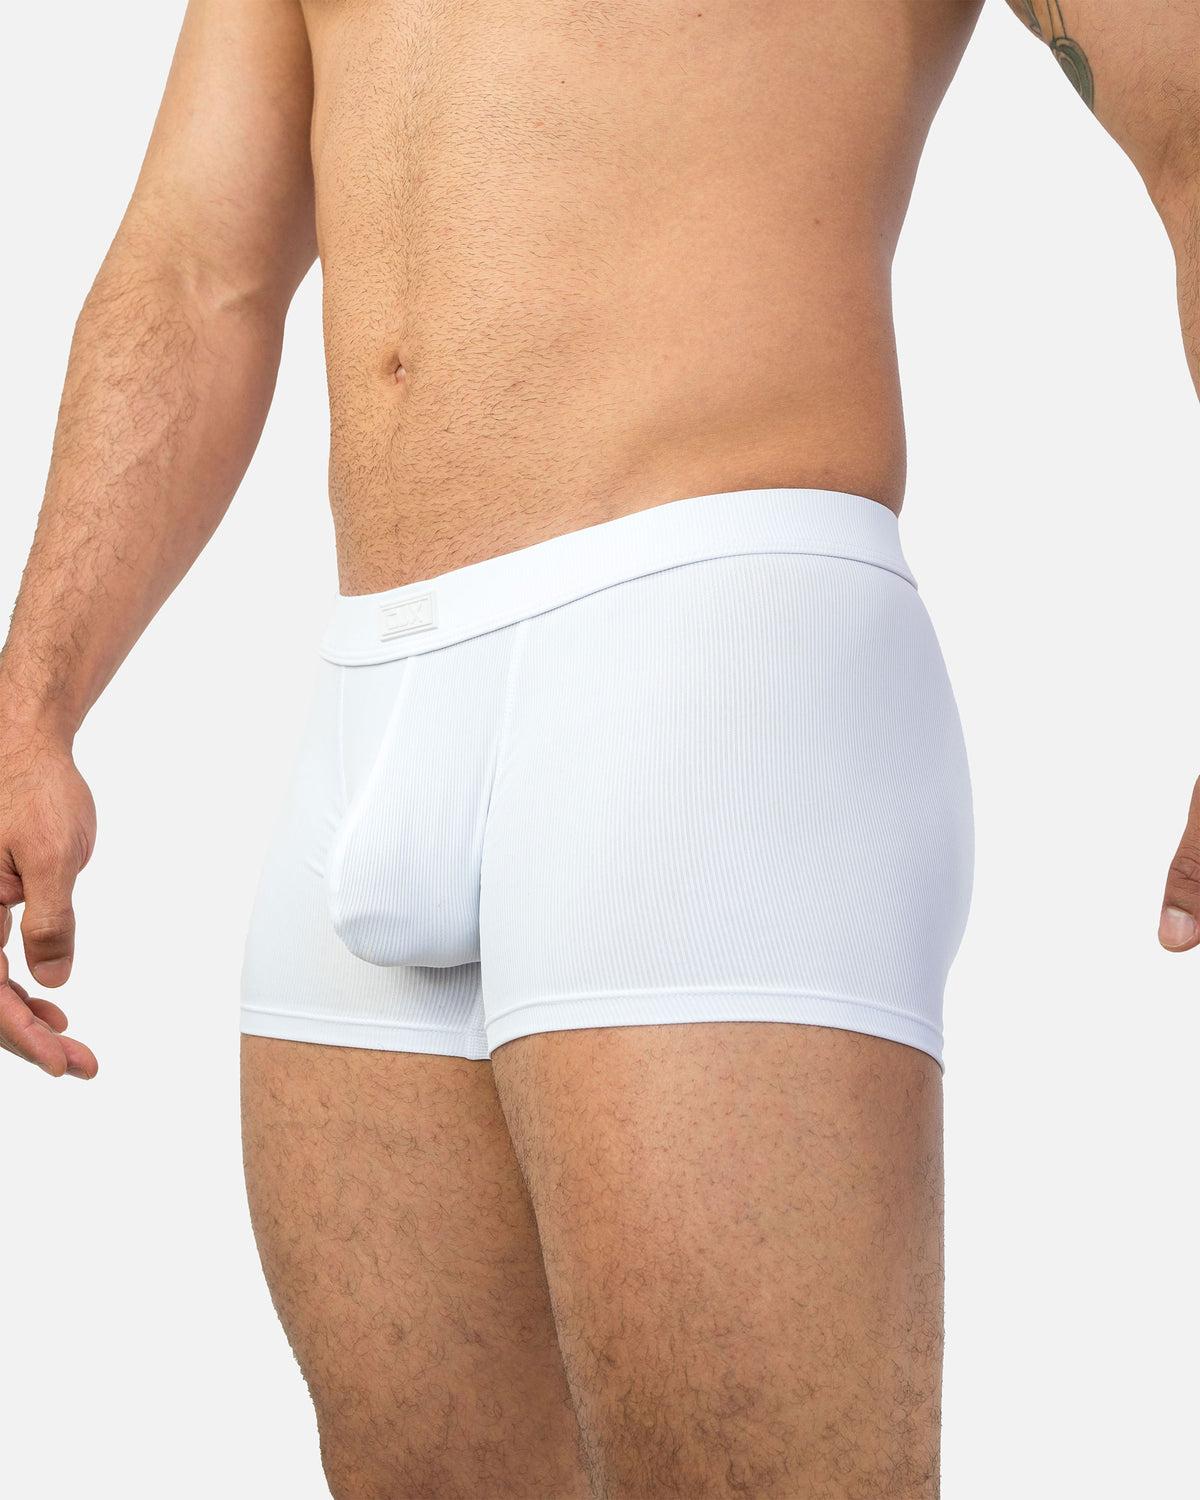 Buy Mens Jocks and Sexy Underwear Online in Australia - Daily Jocks